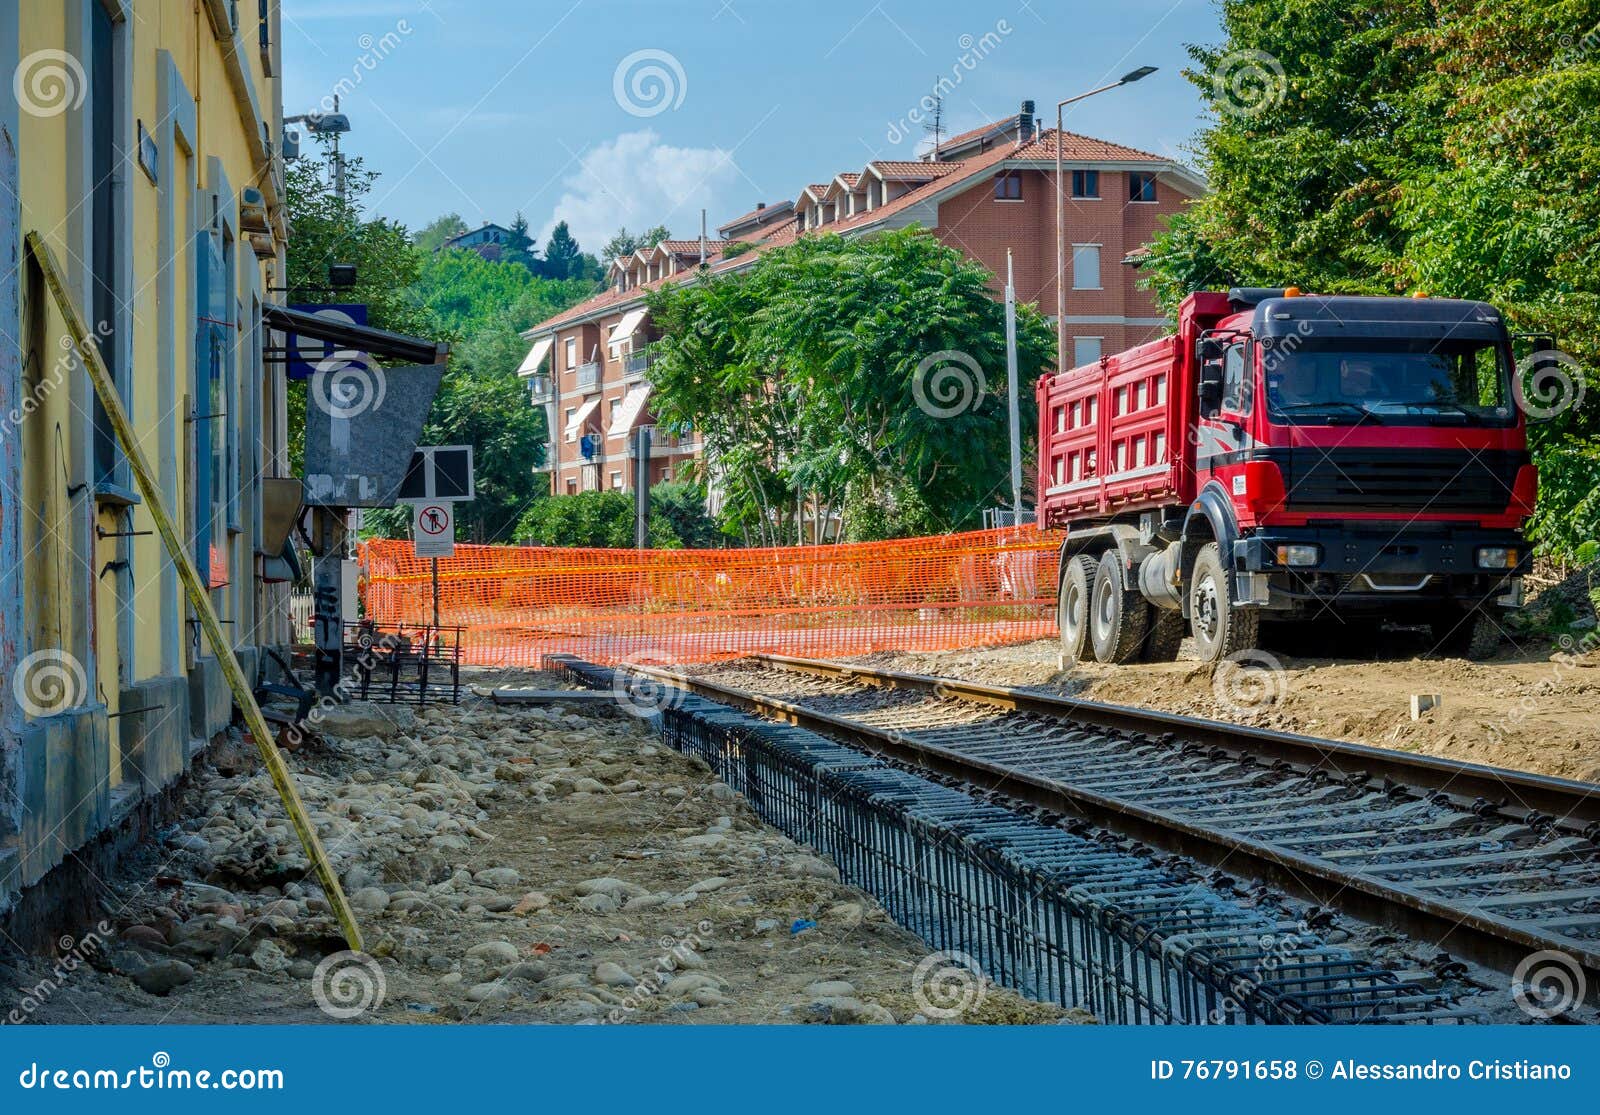 railway construction yard